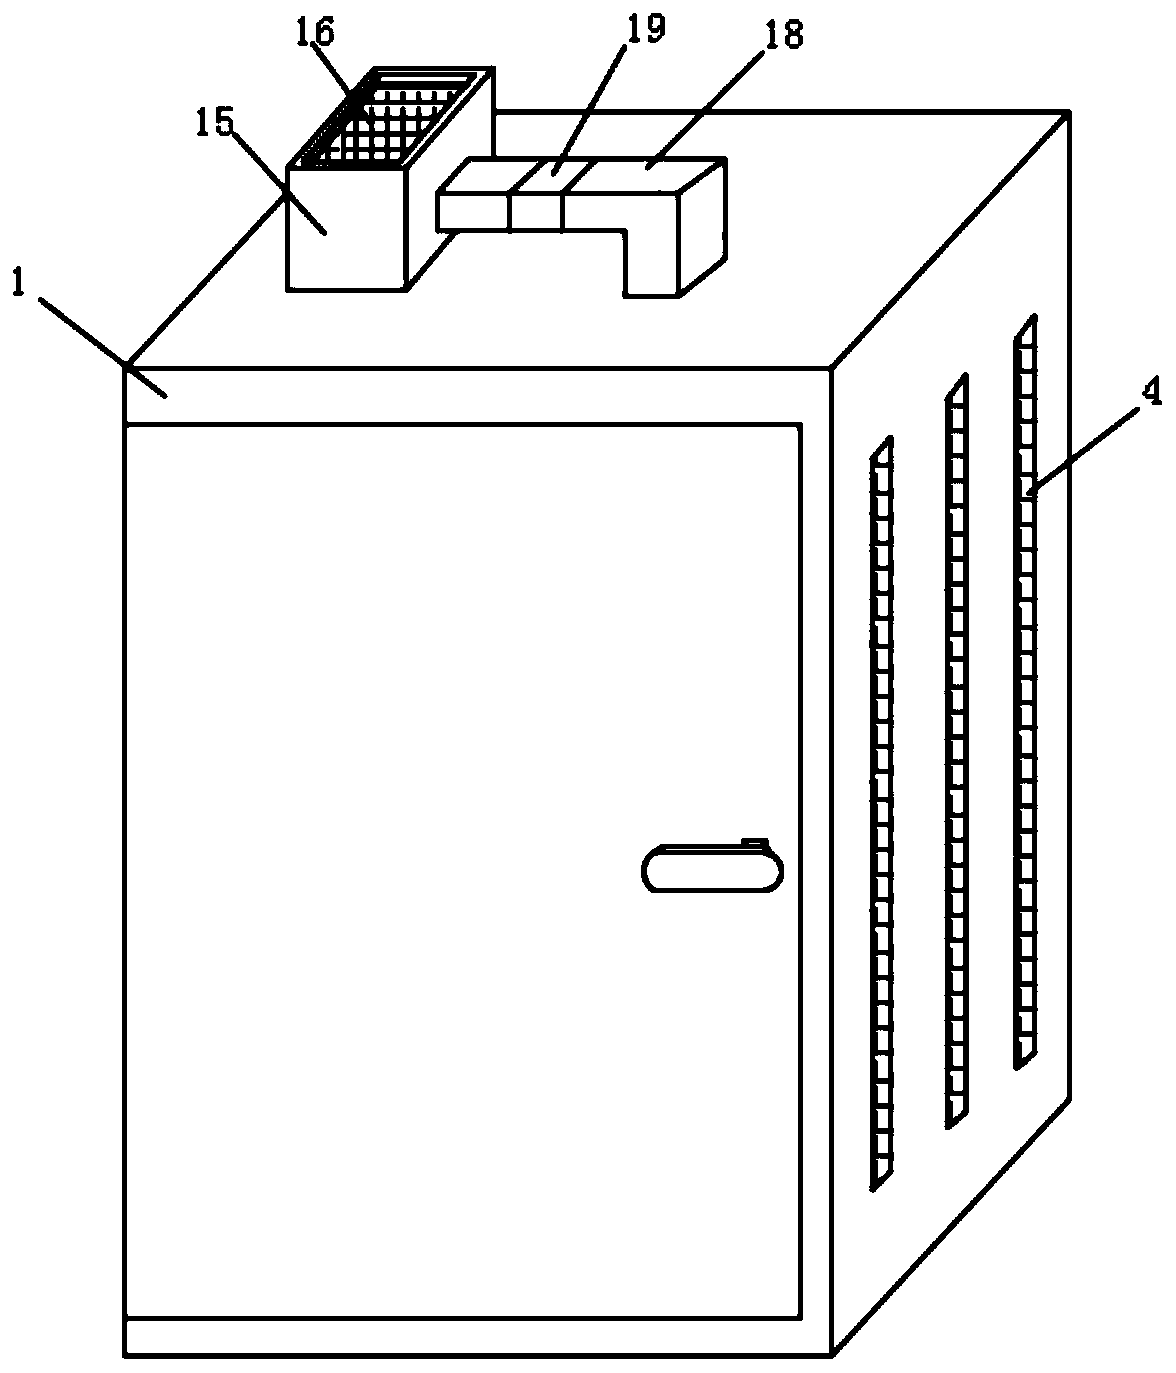 Transformer electric appliance cabinet